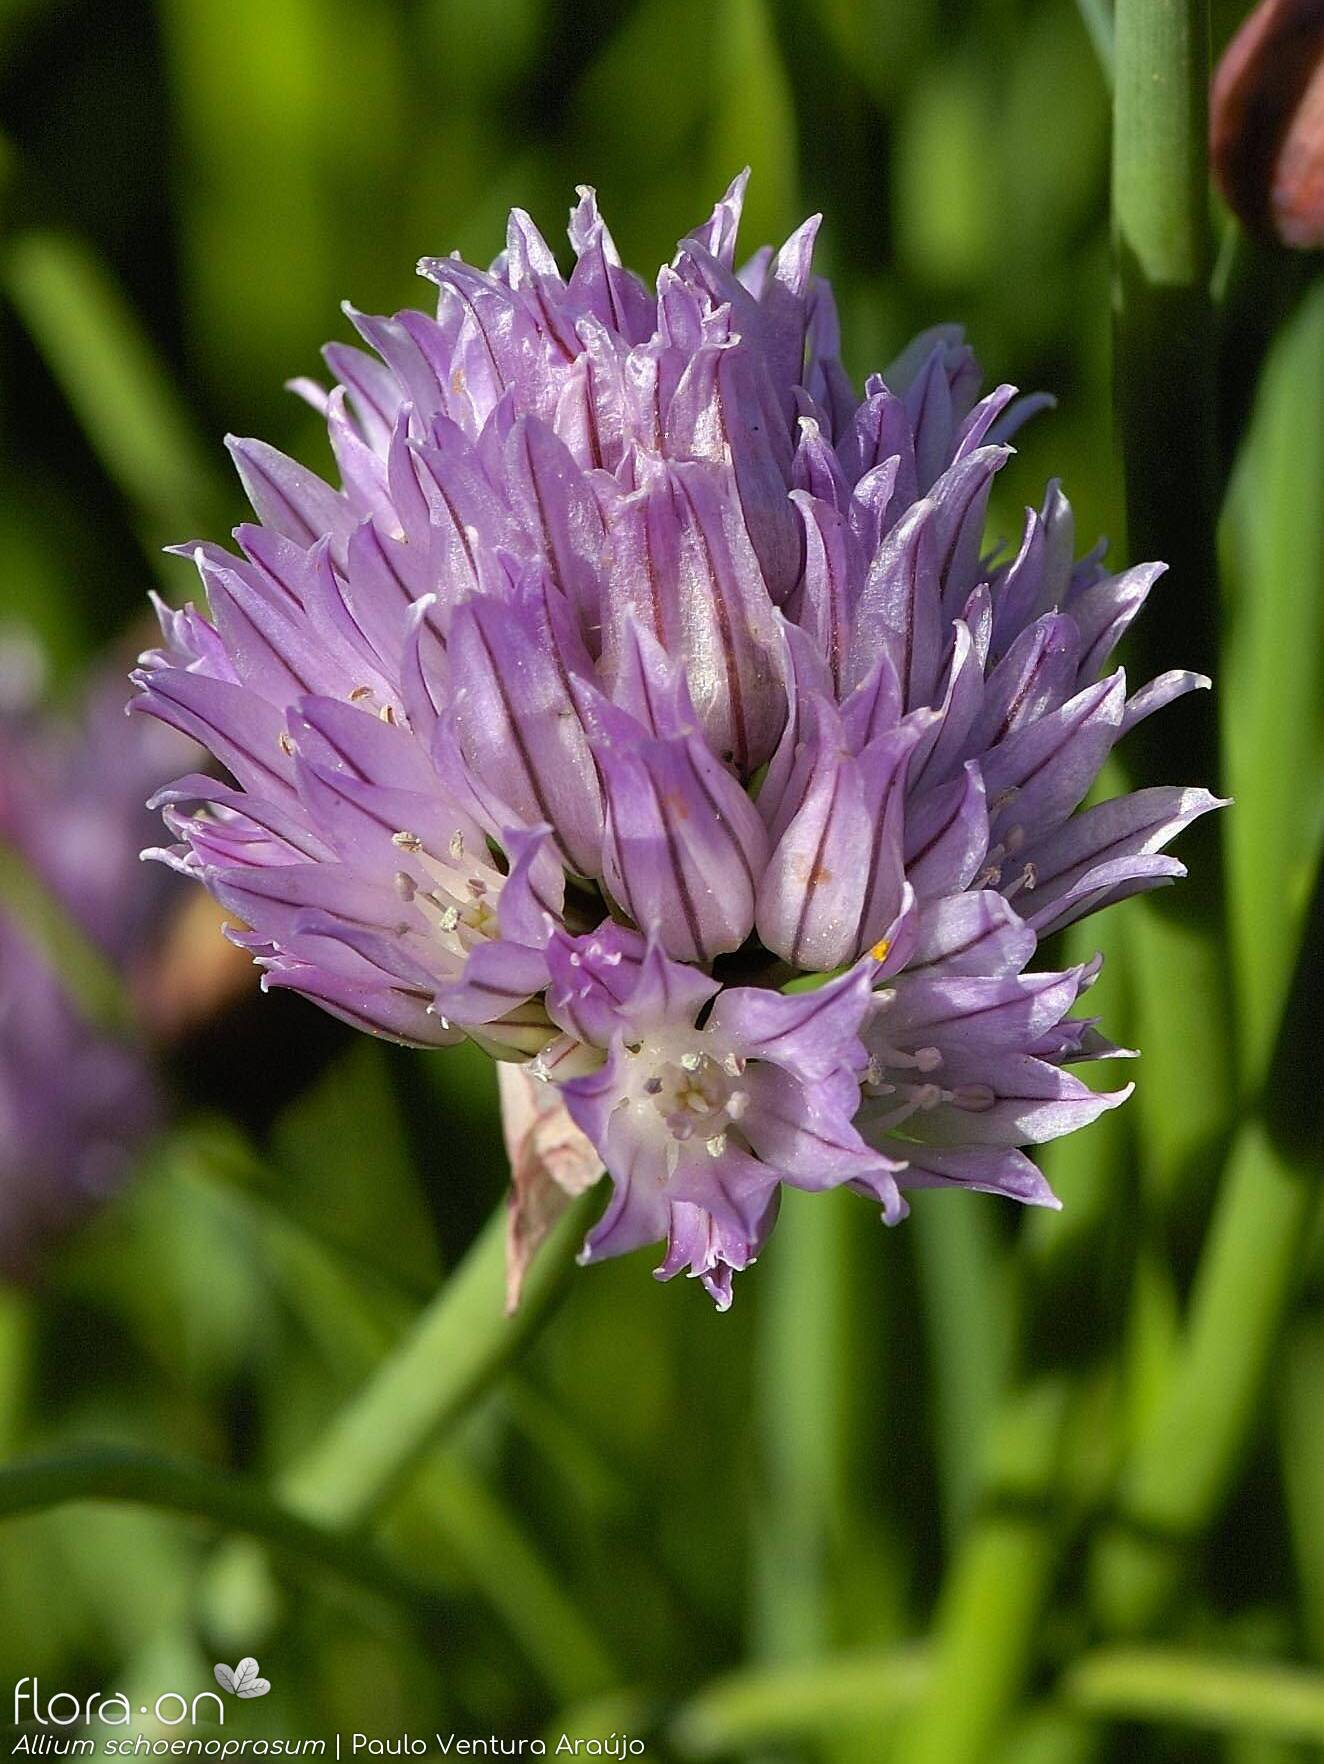 Allium schoenoprasum - Flor (geral) | Paulo Ventura Araújo; CC BY-NC 4.0